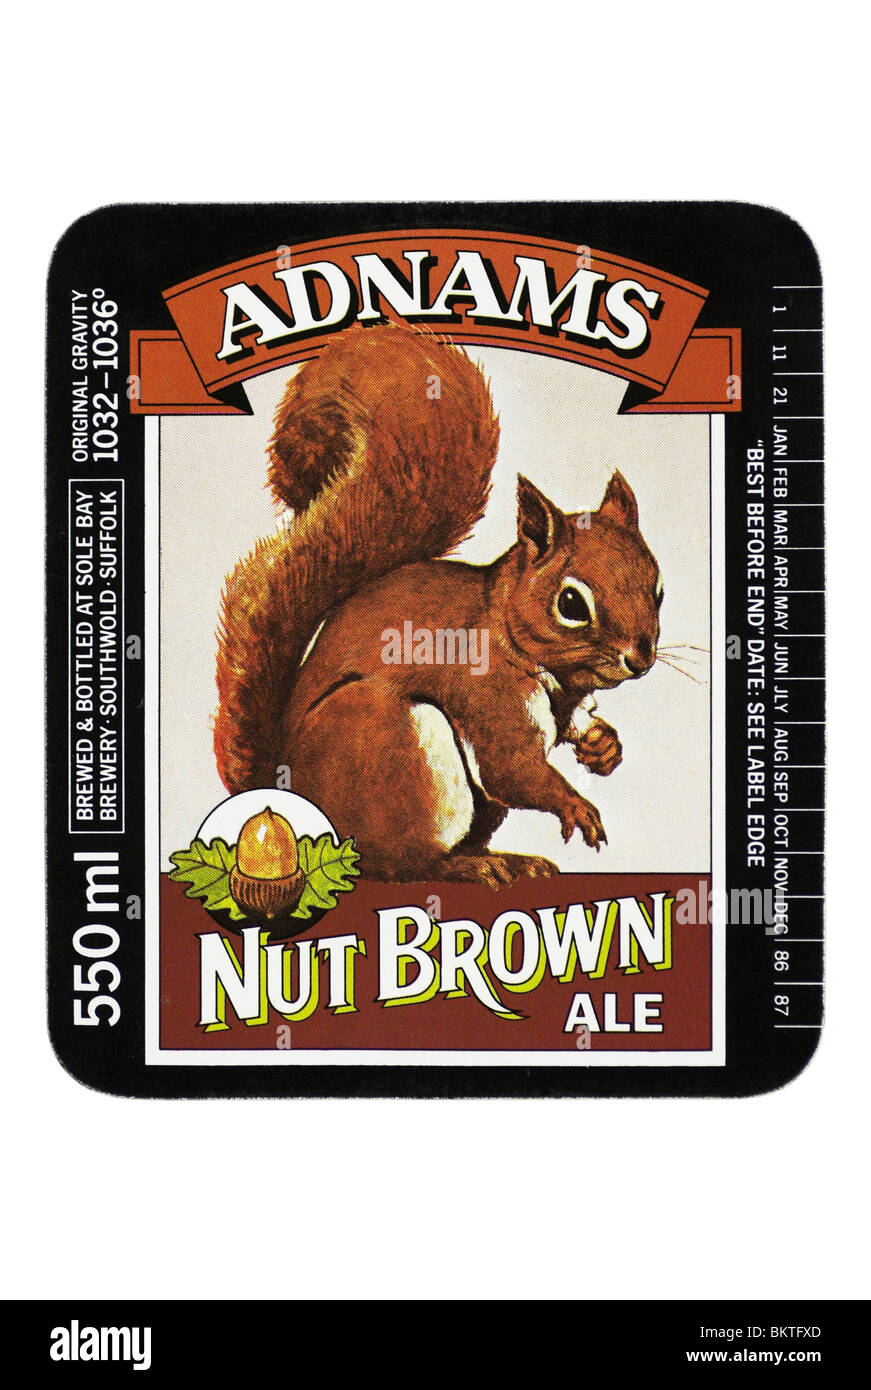 Adnams Nut Brown Ale bottle label - circa 1986 - 1987. Stock Photo